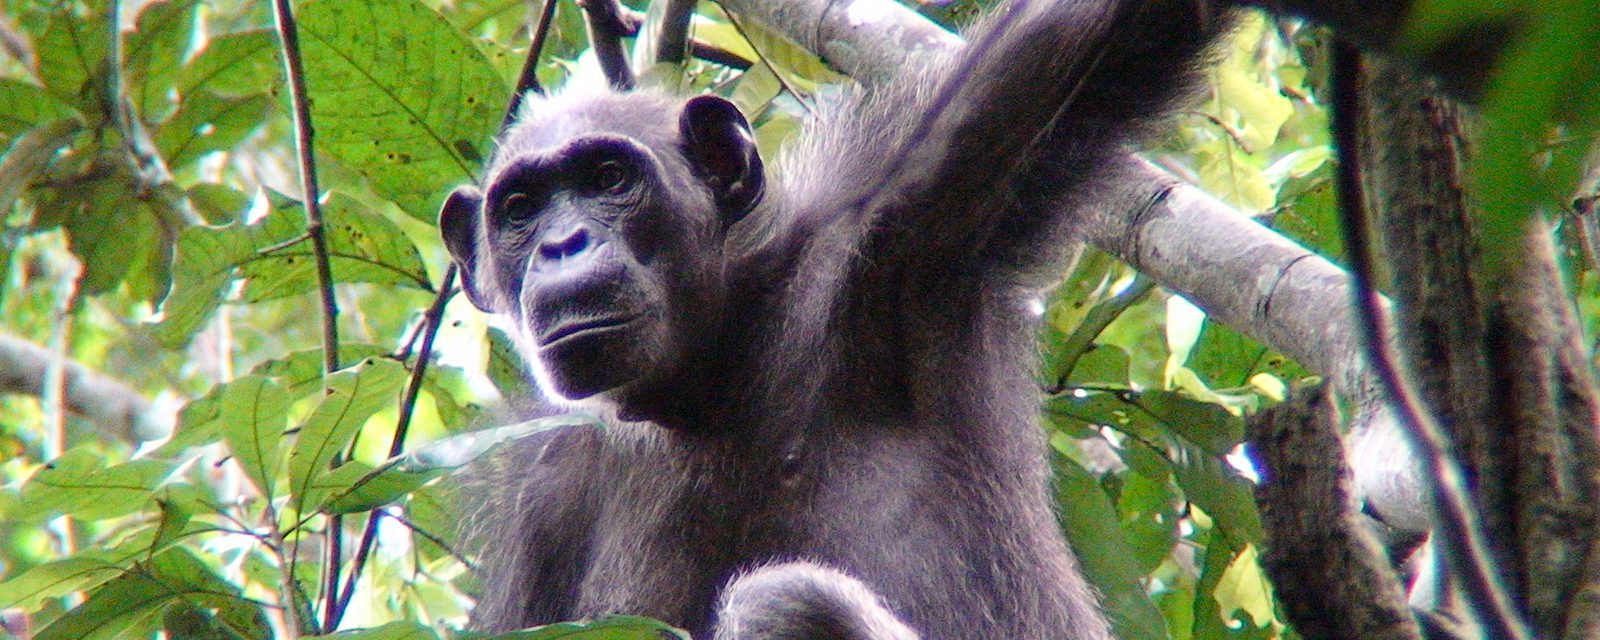 The Goualougo Triangle Ape Project